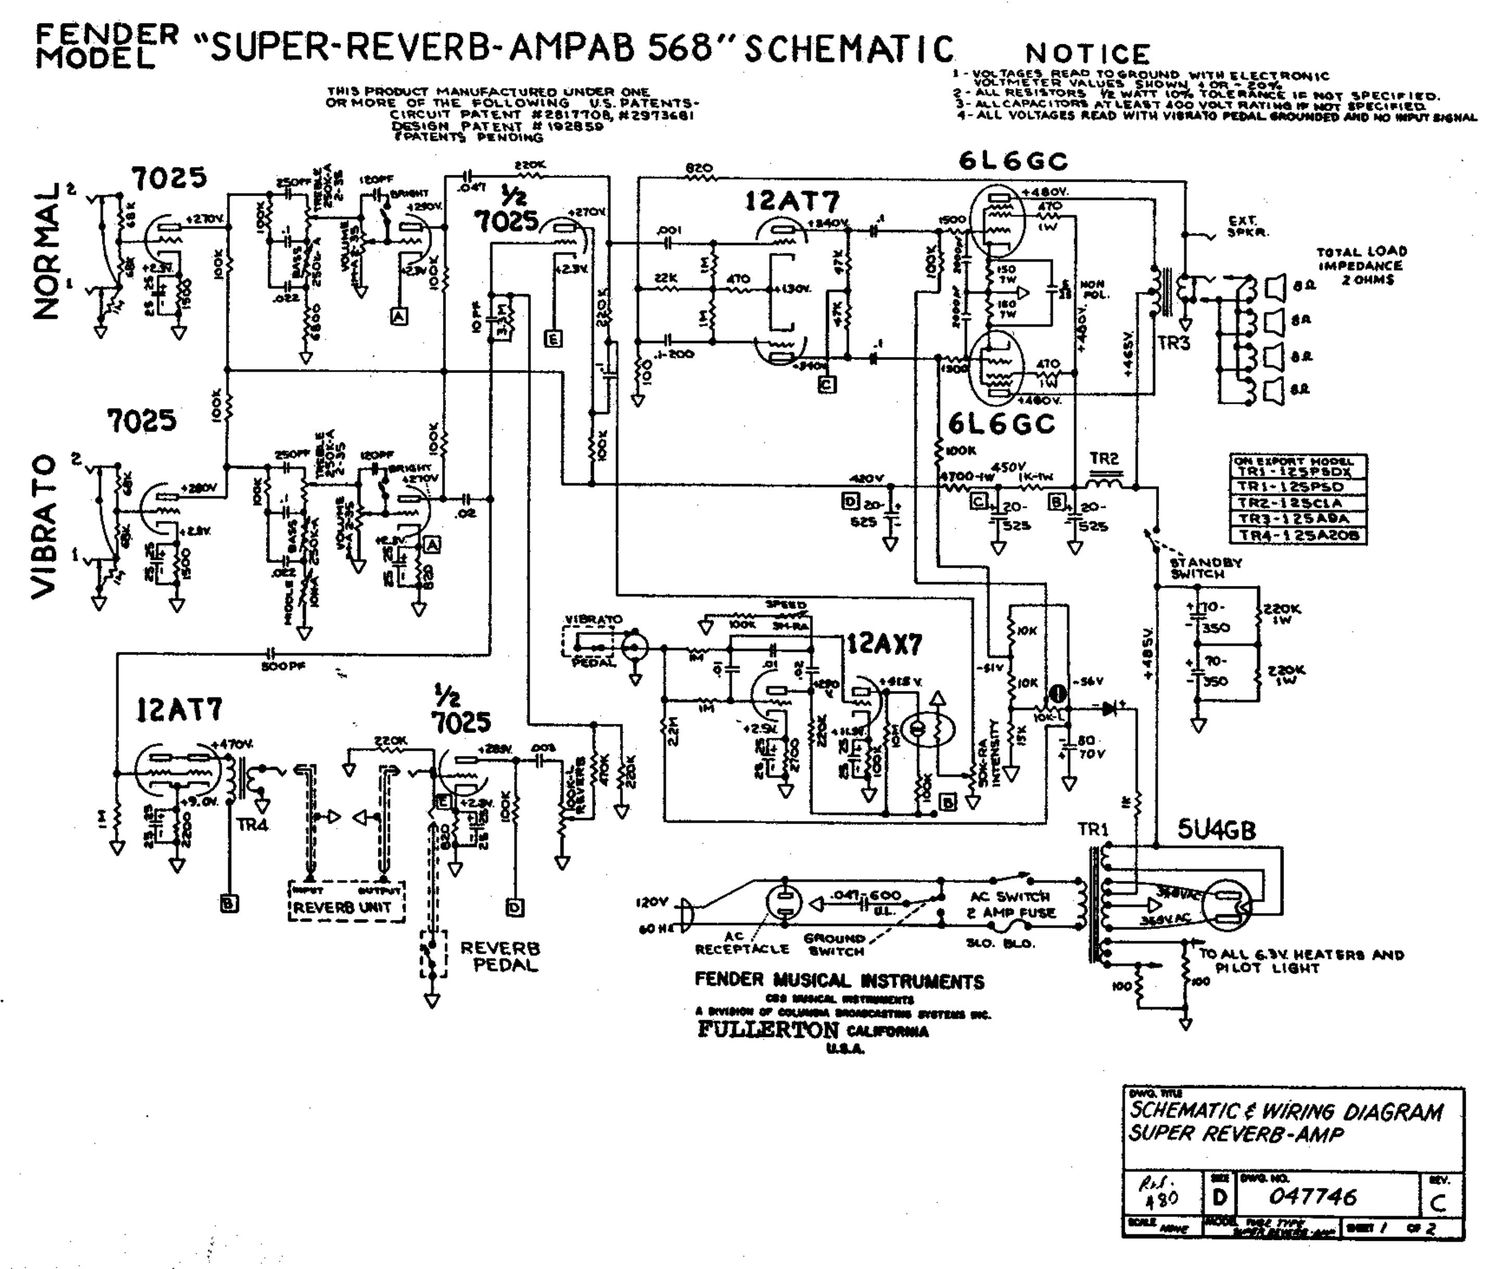 fender super reverb ab568 schematic